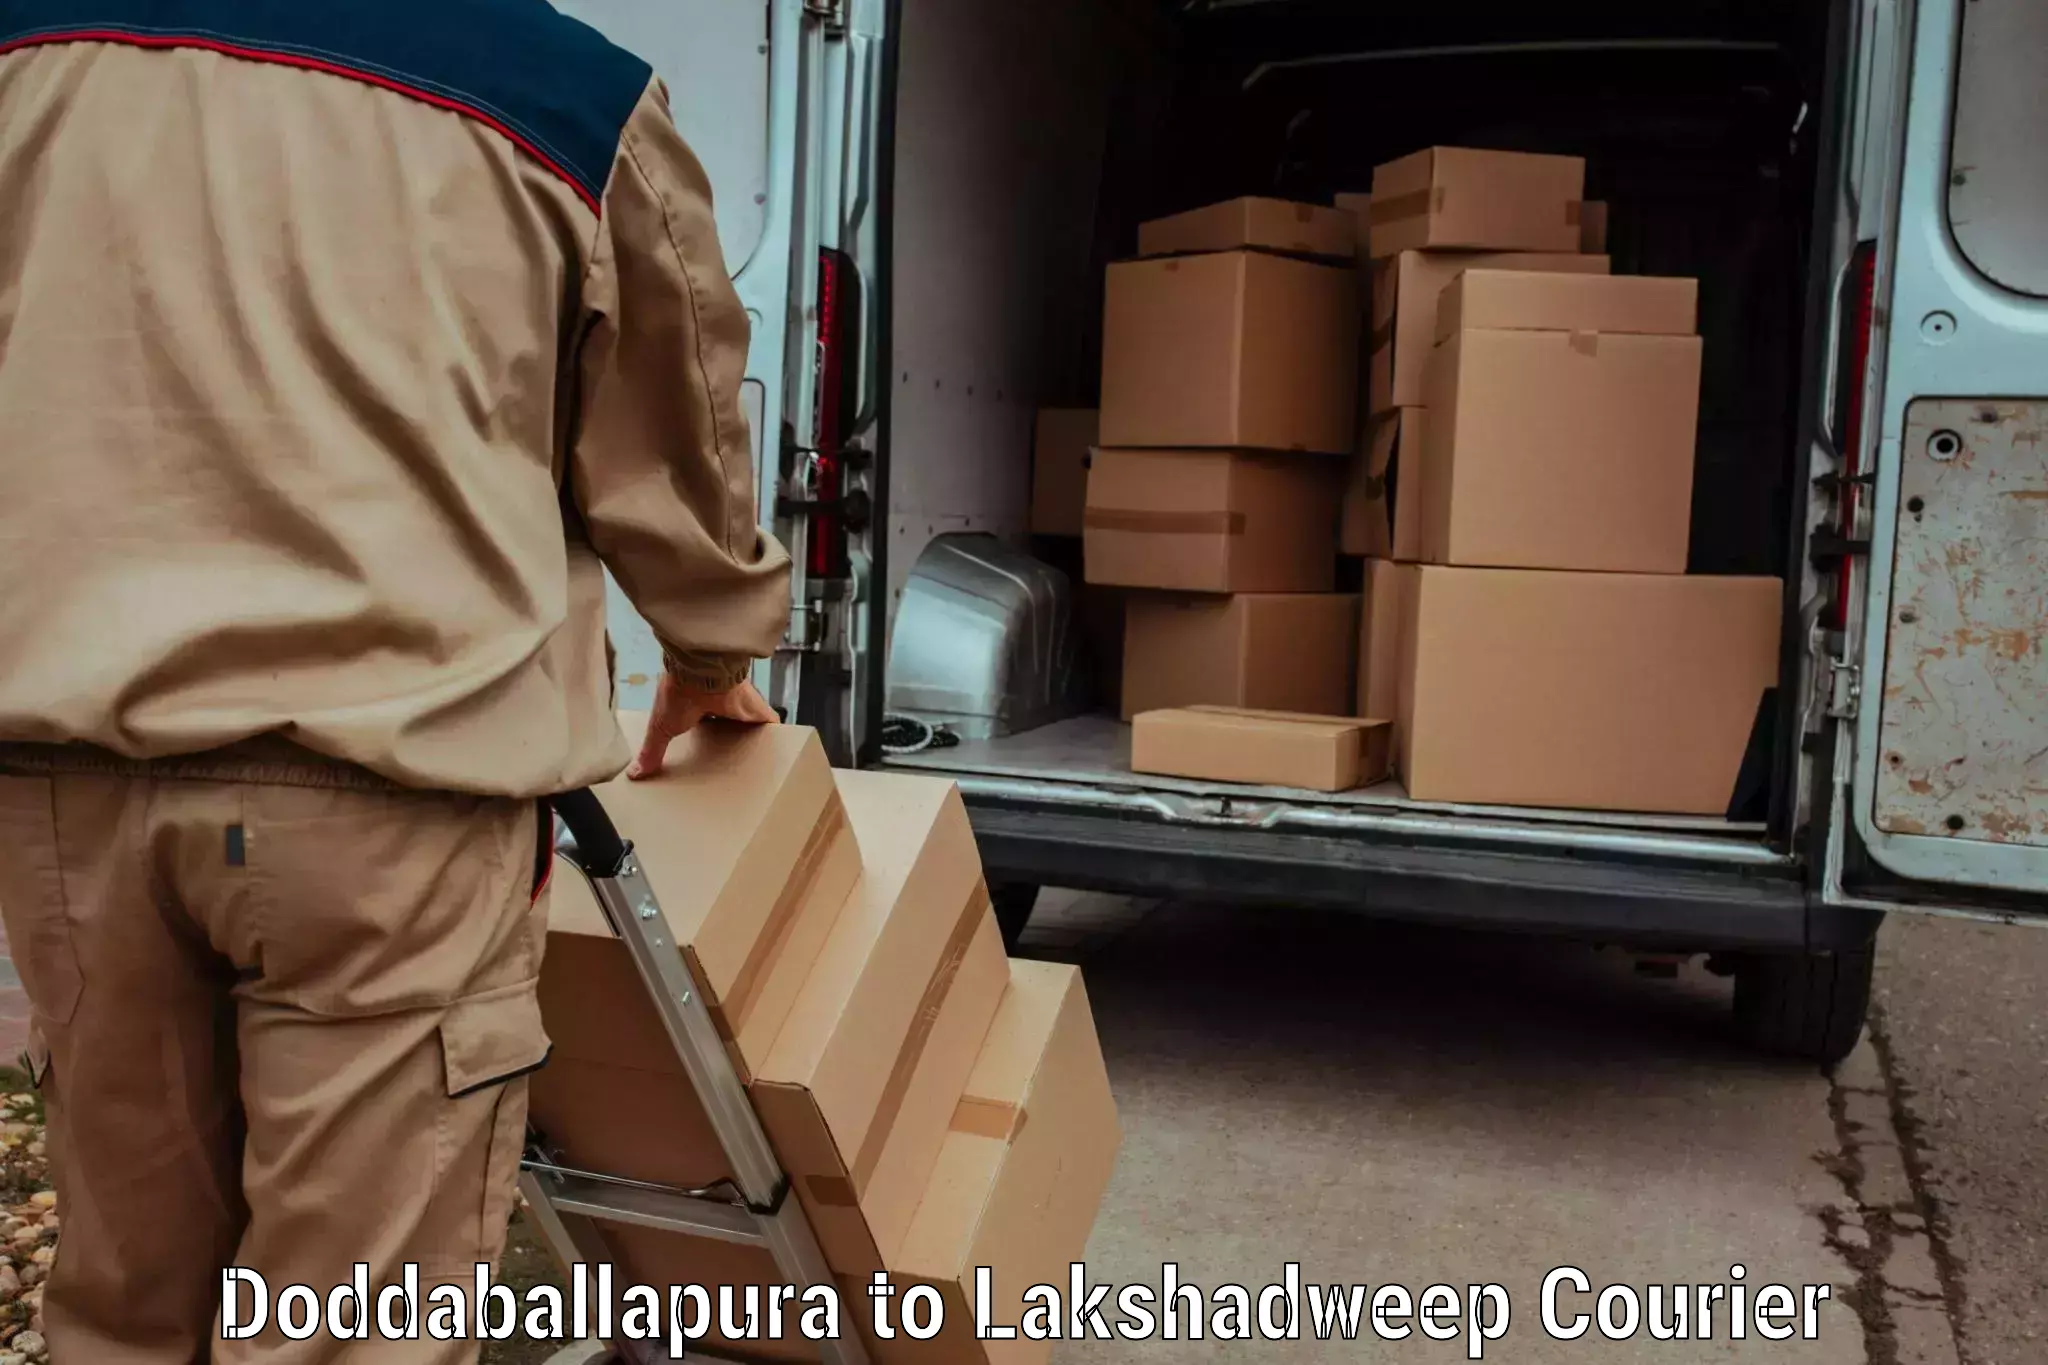 Multi-city courier Doddaballapura to Lakshadweep